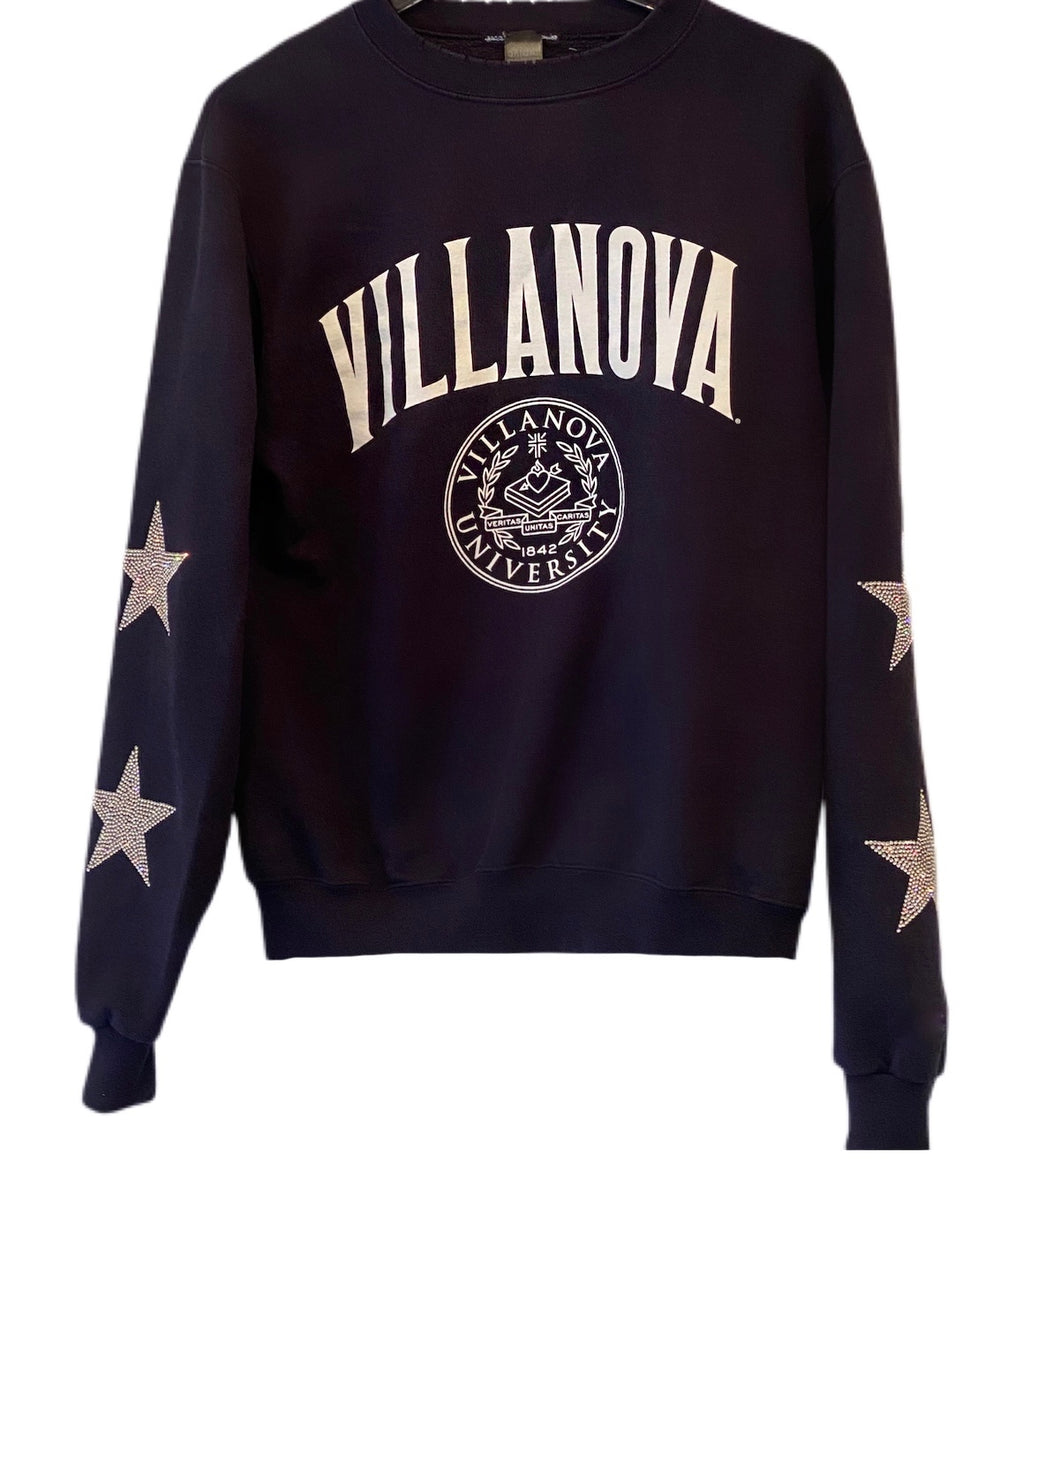 Villanova University One of a KIND Vintage Sweatshirt with Crystal Star Design